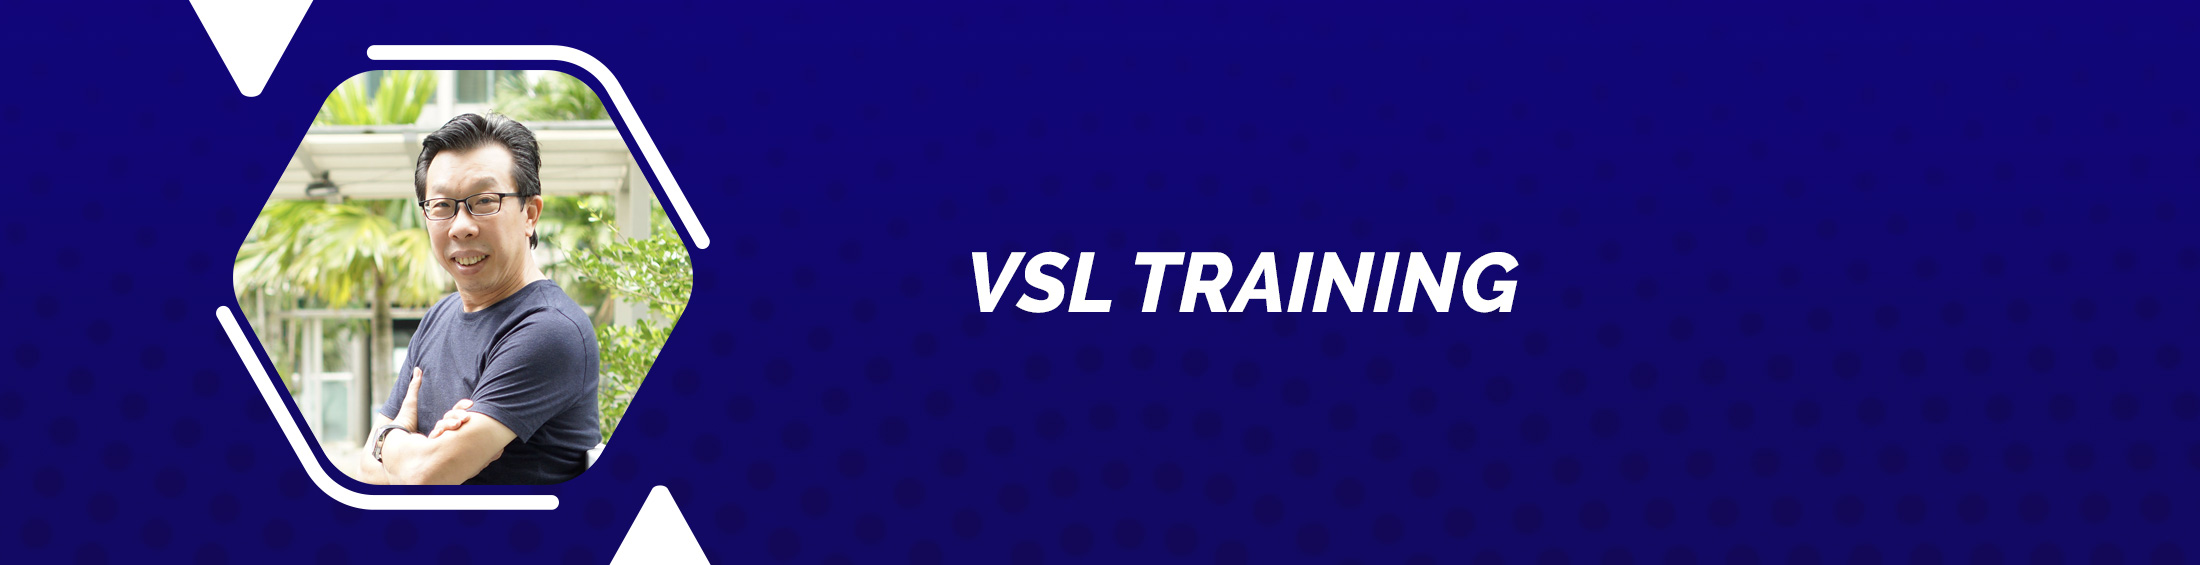 VSL_training